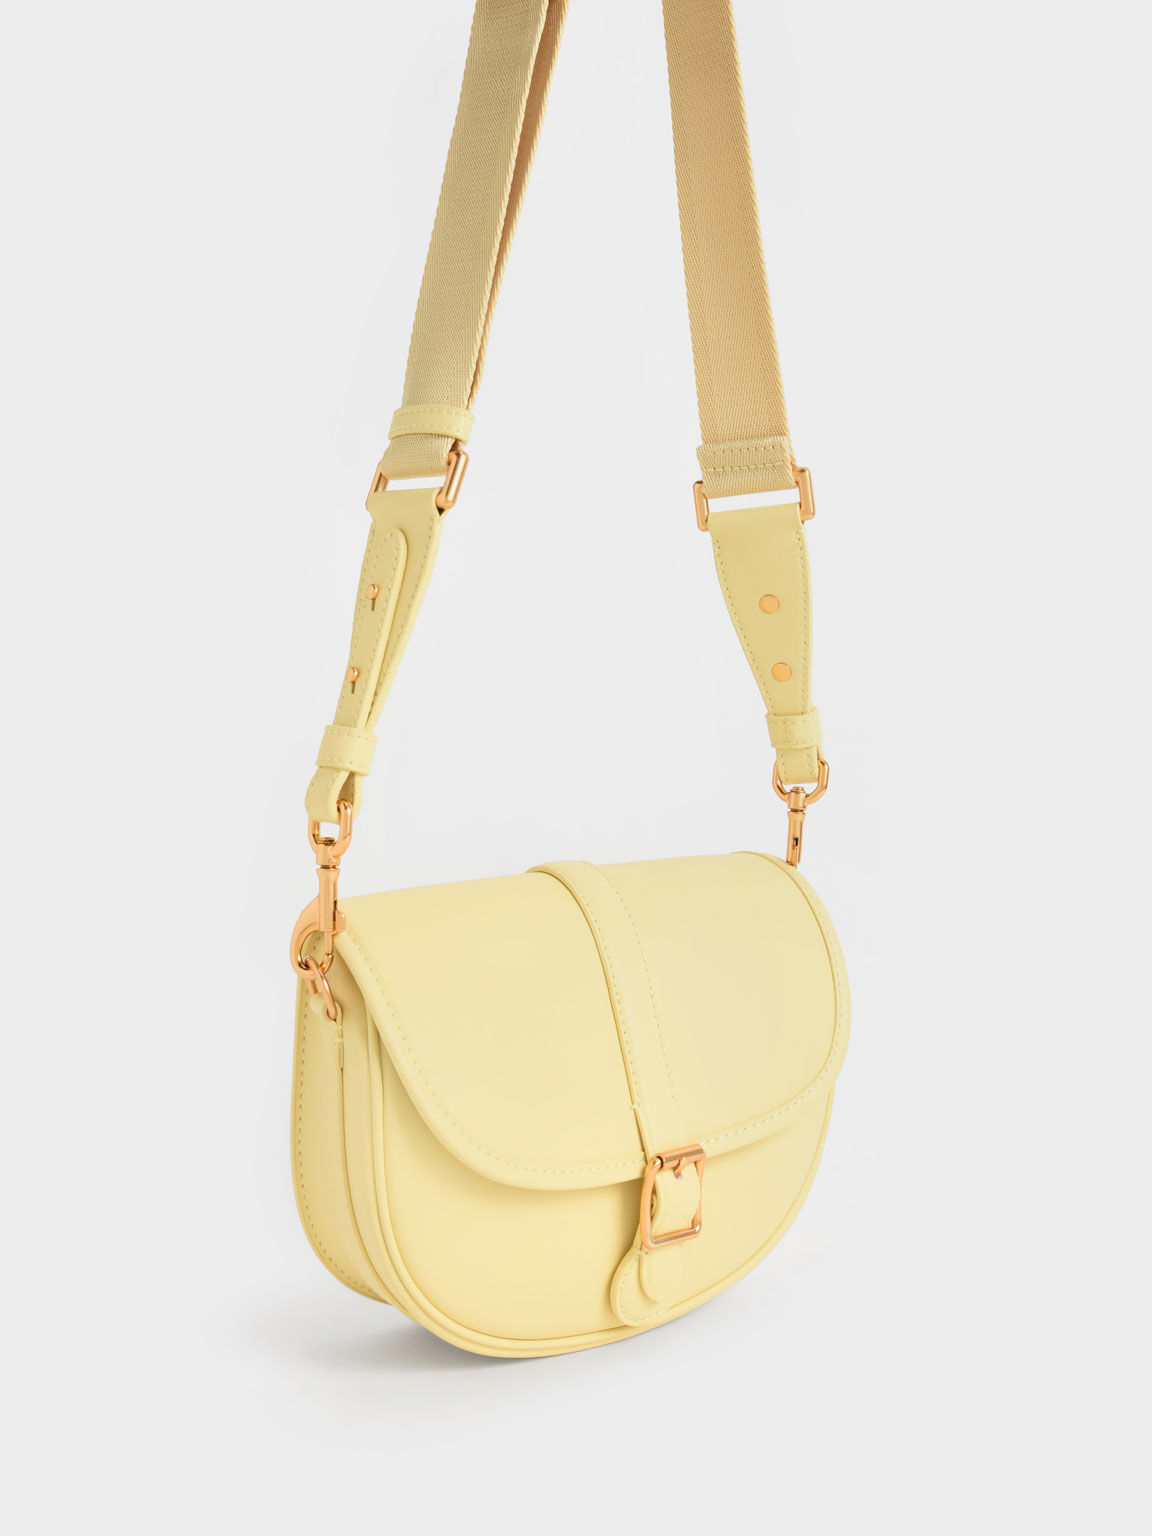 Women's Bags | Shop Exclusive Styles | PEDRO UK